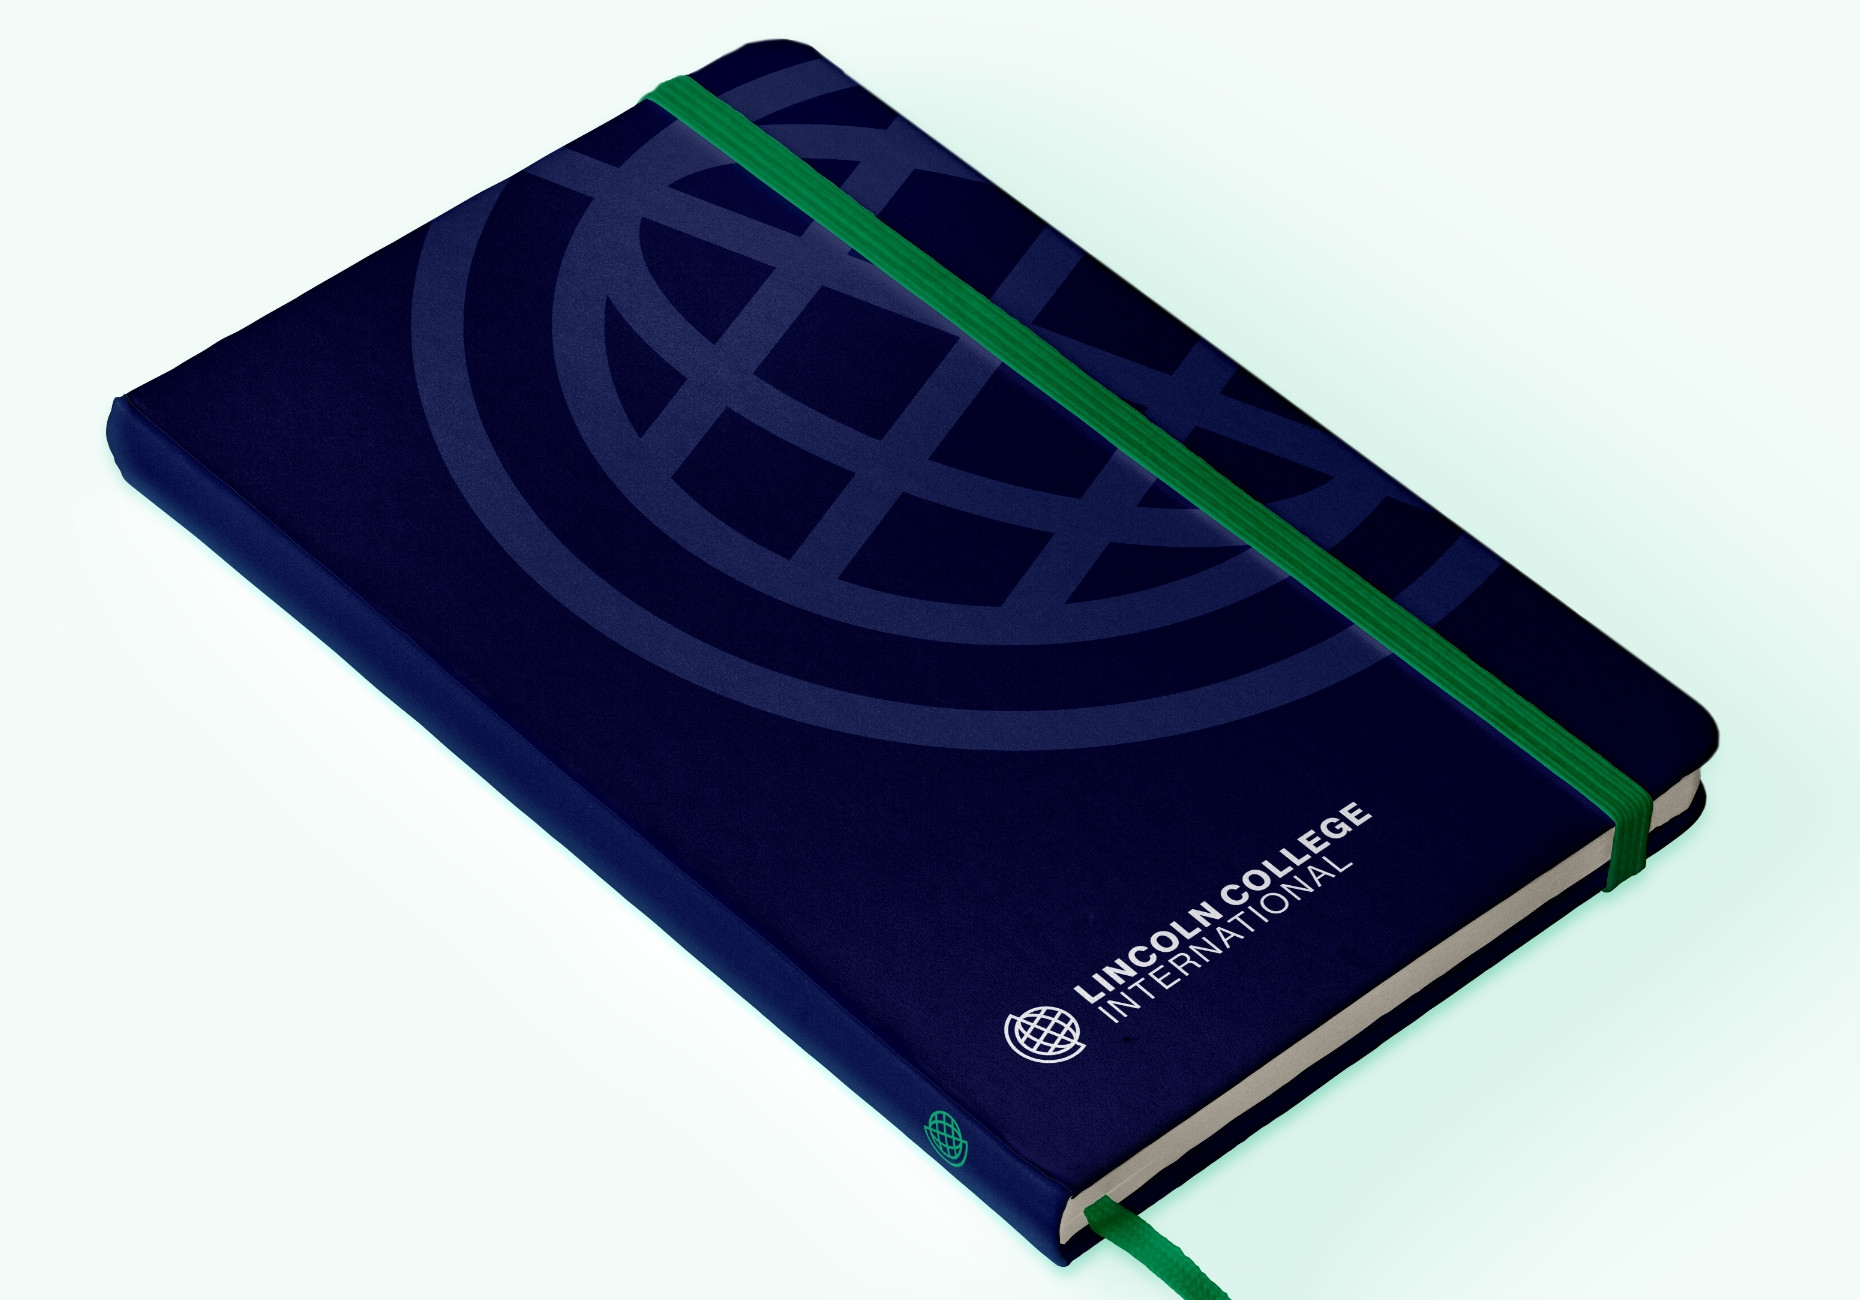 College notebook design by Root Studio